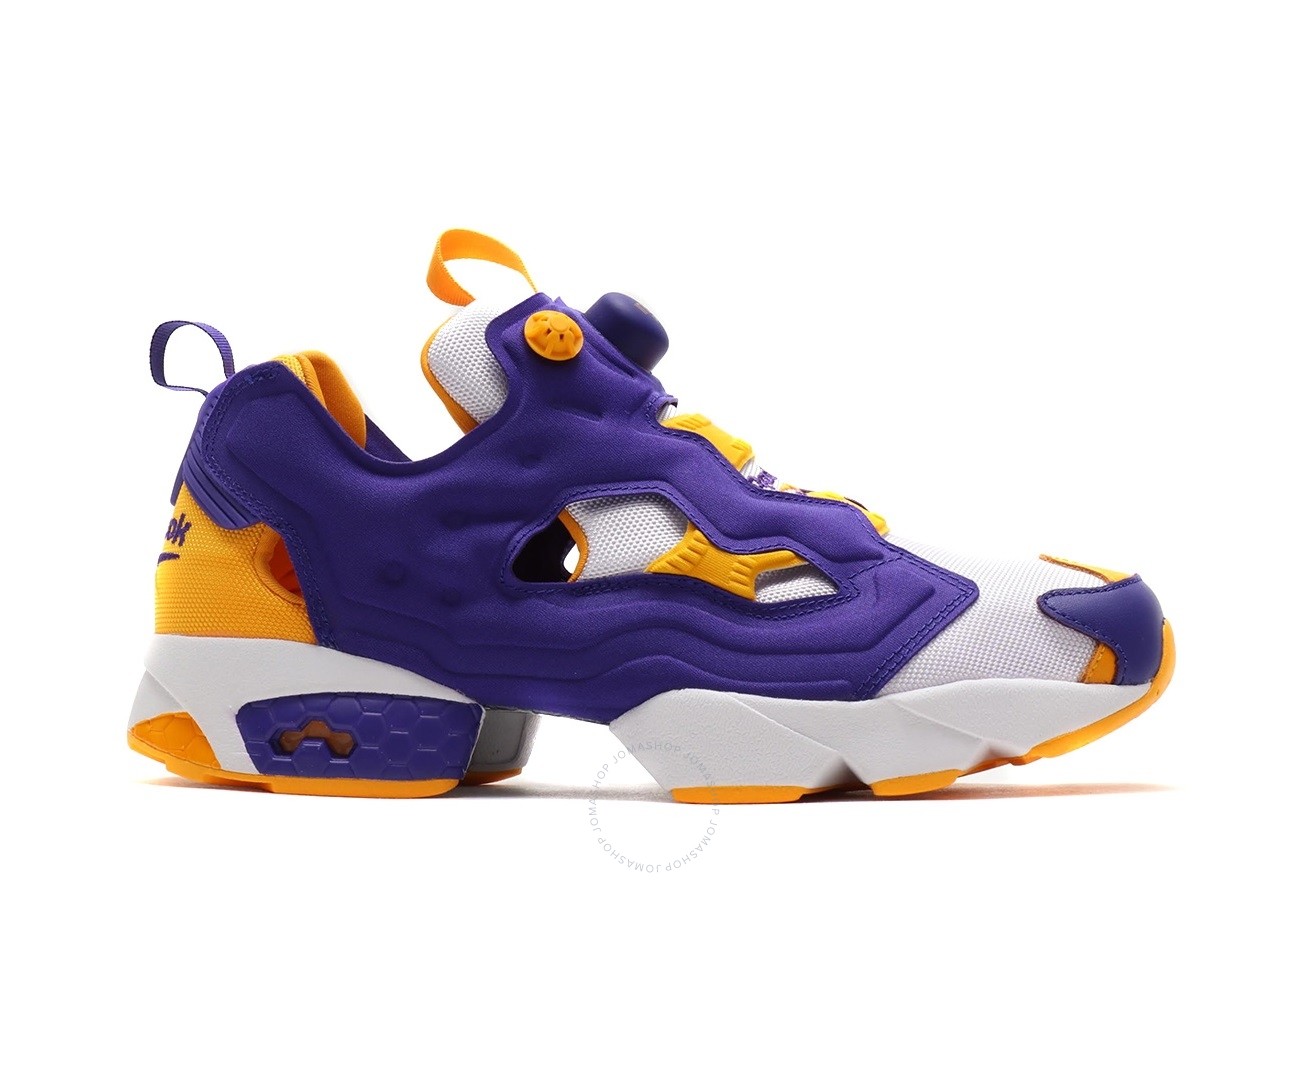 Reebok Men's InstaPump Fury OG Lakers Sneakers DV8291